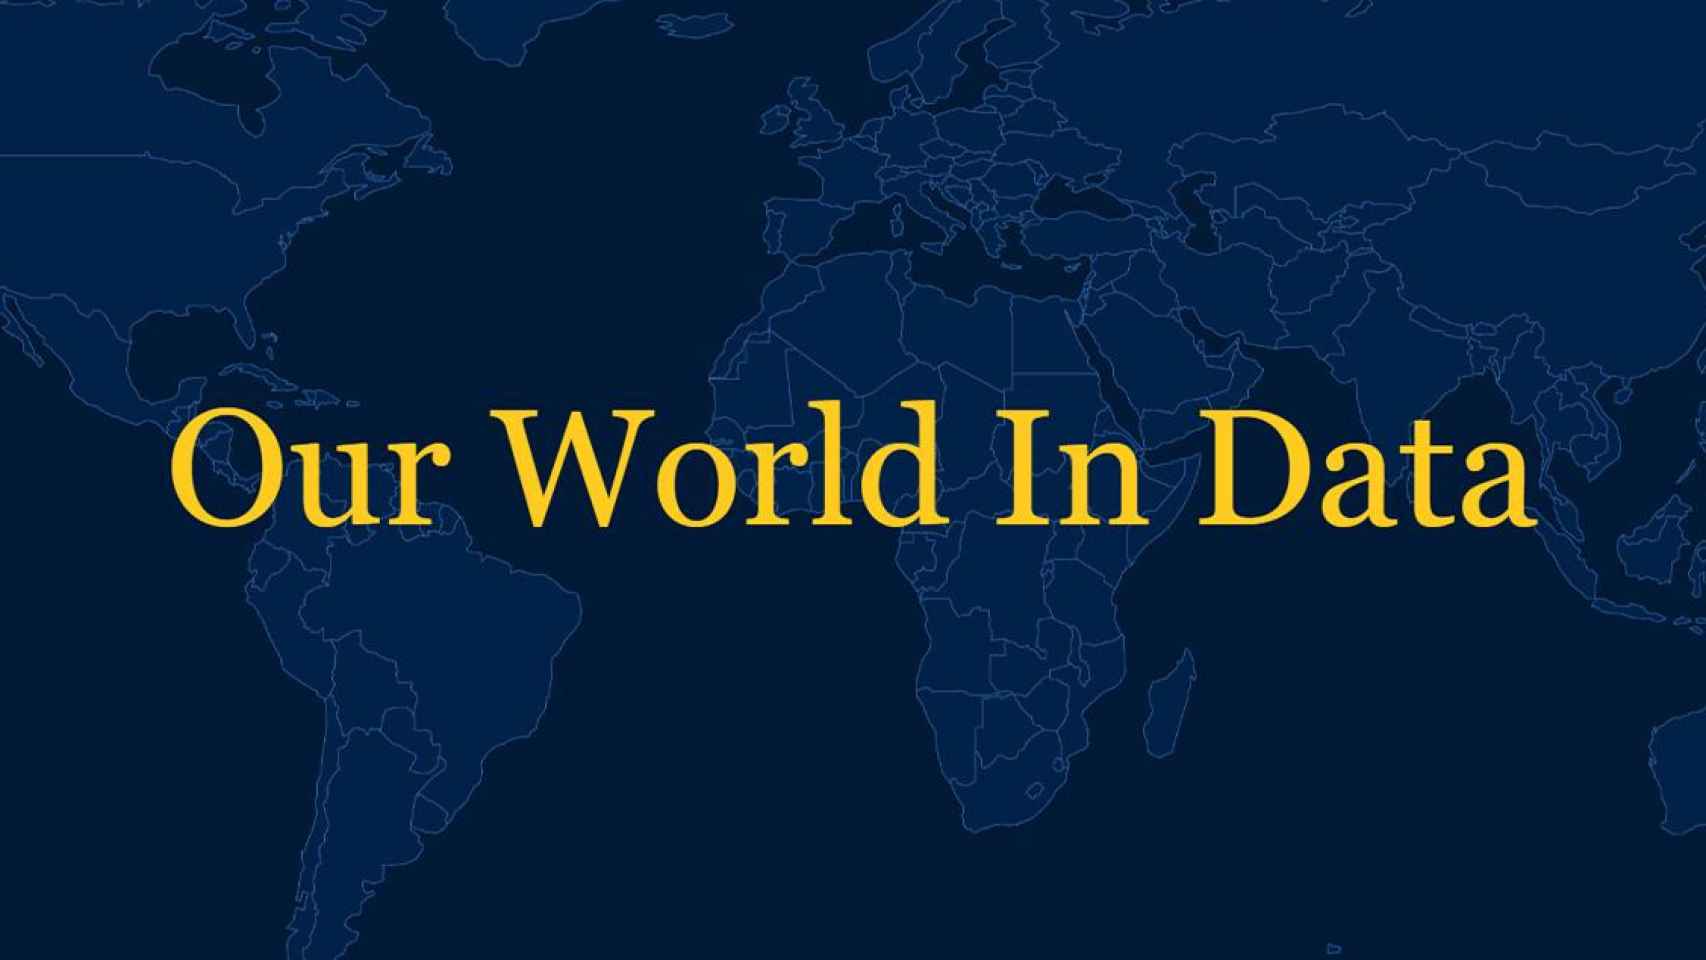 Logo de la plataforma 'Our world in data' / OWD